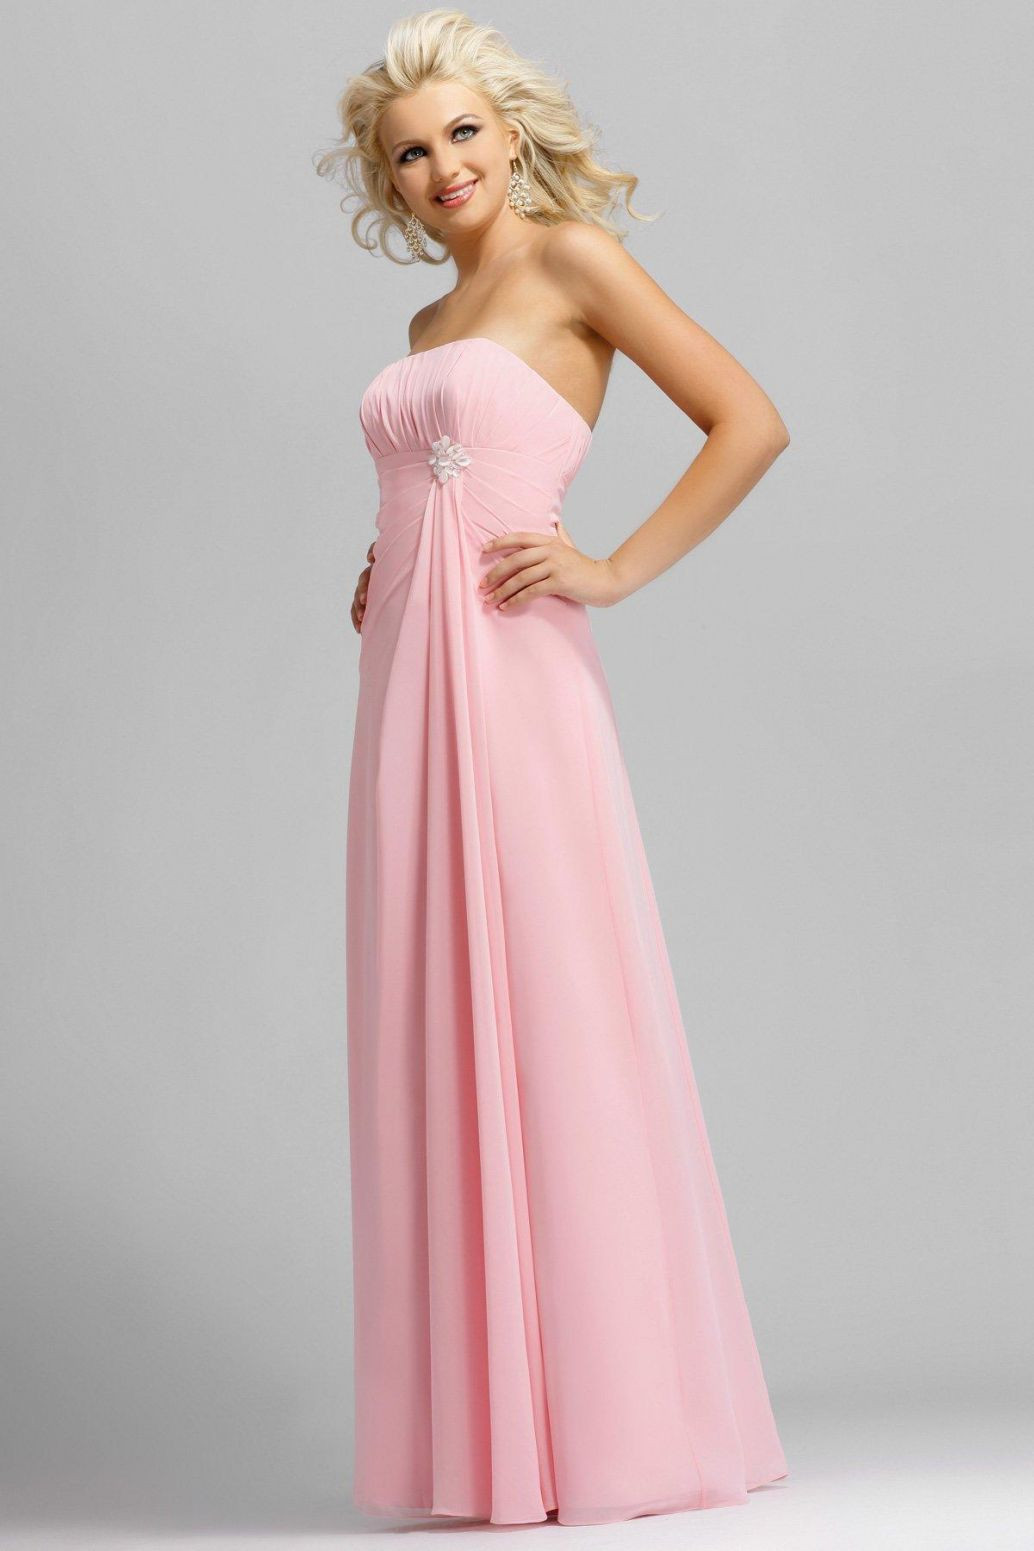 Dresses To Wear For A Wedding
 Long Bright Pink Bridesmaid Dress Designs Wedding Dress